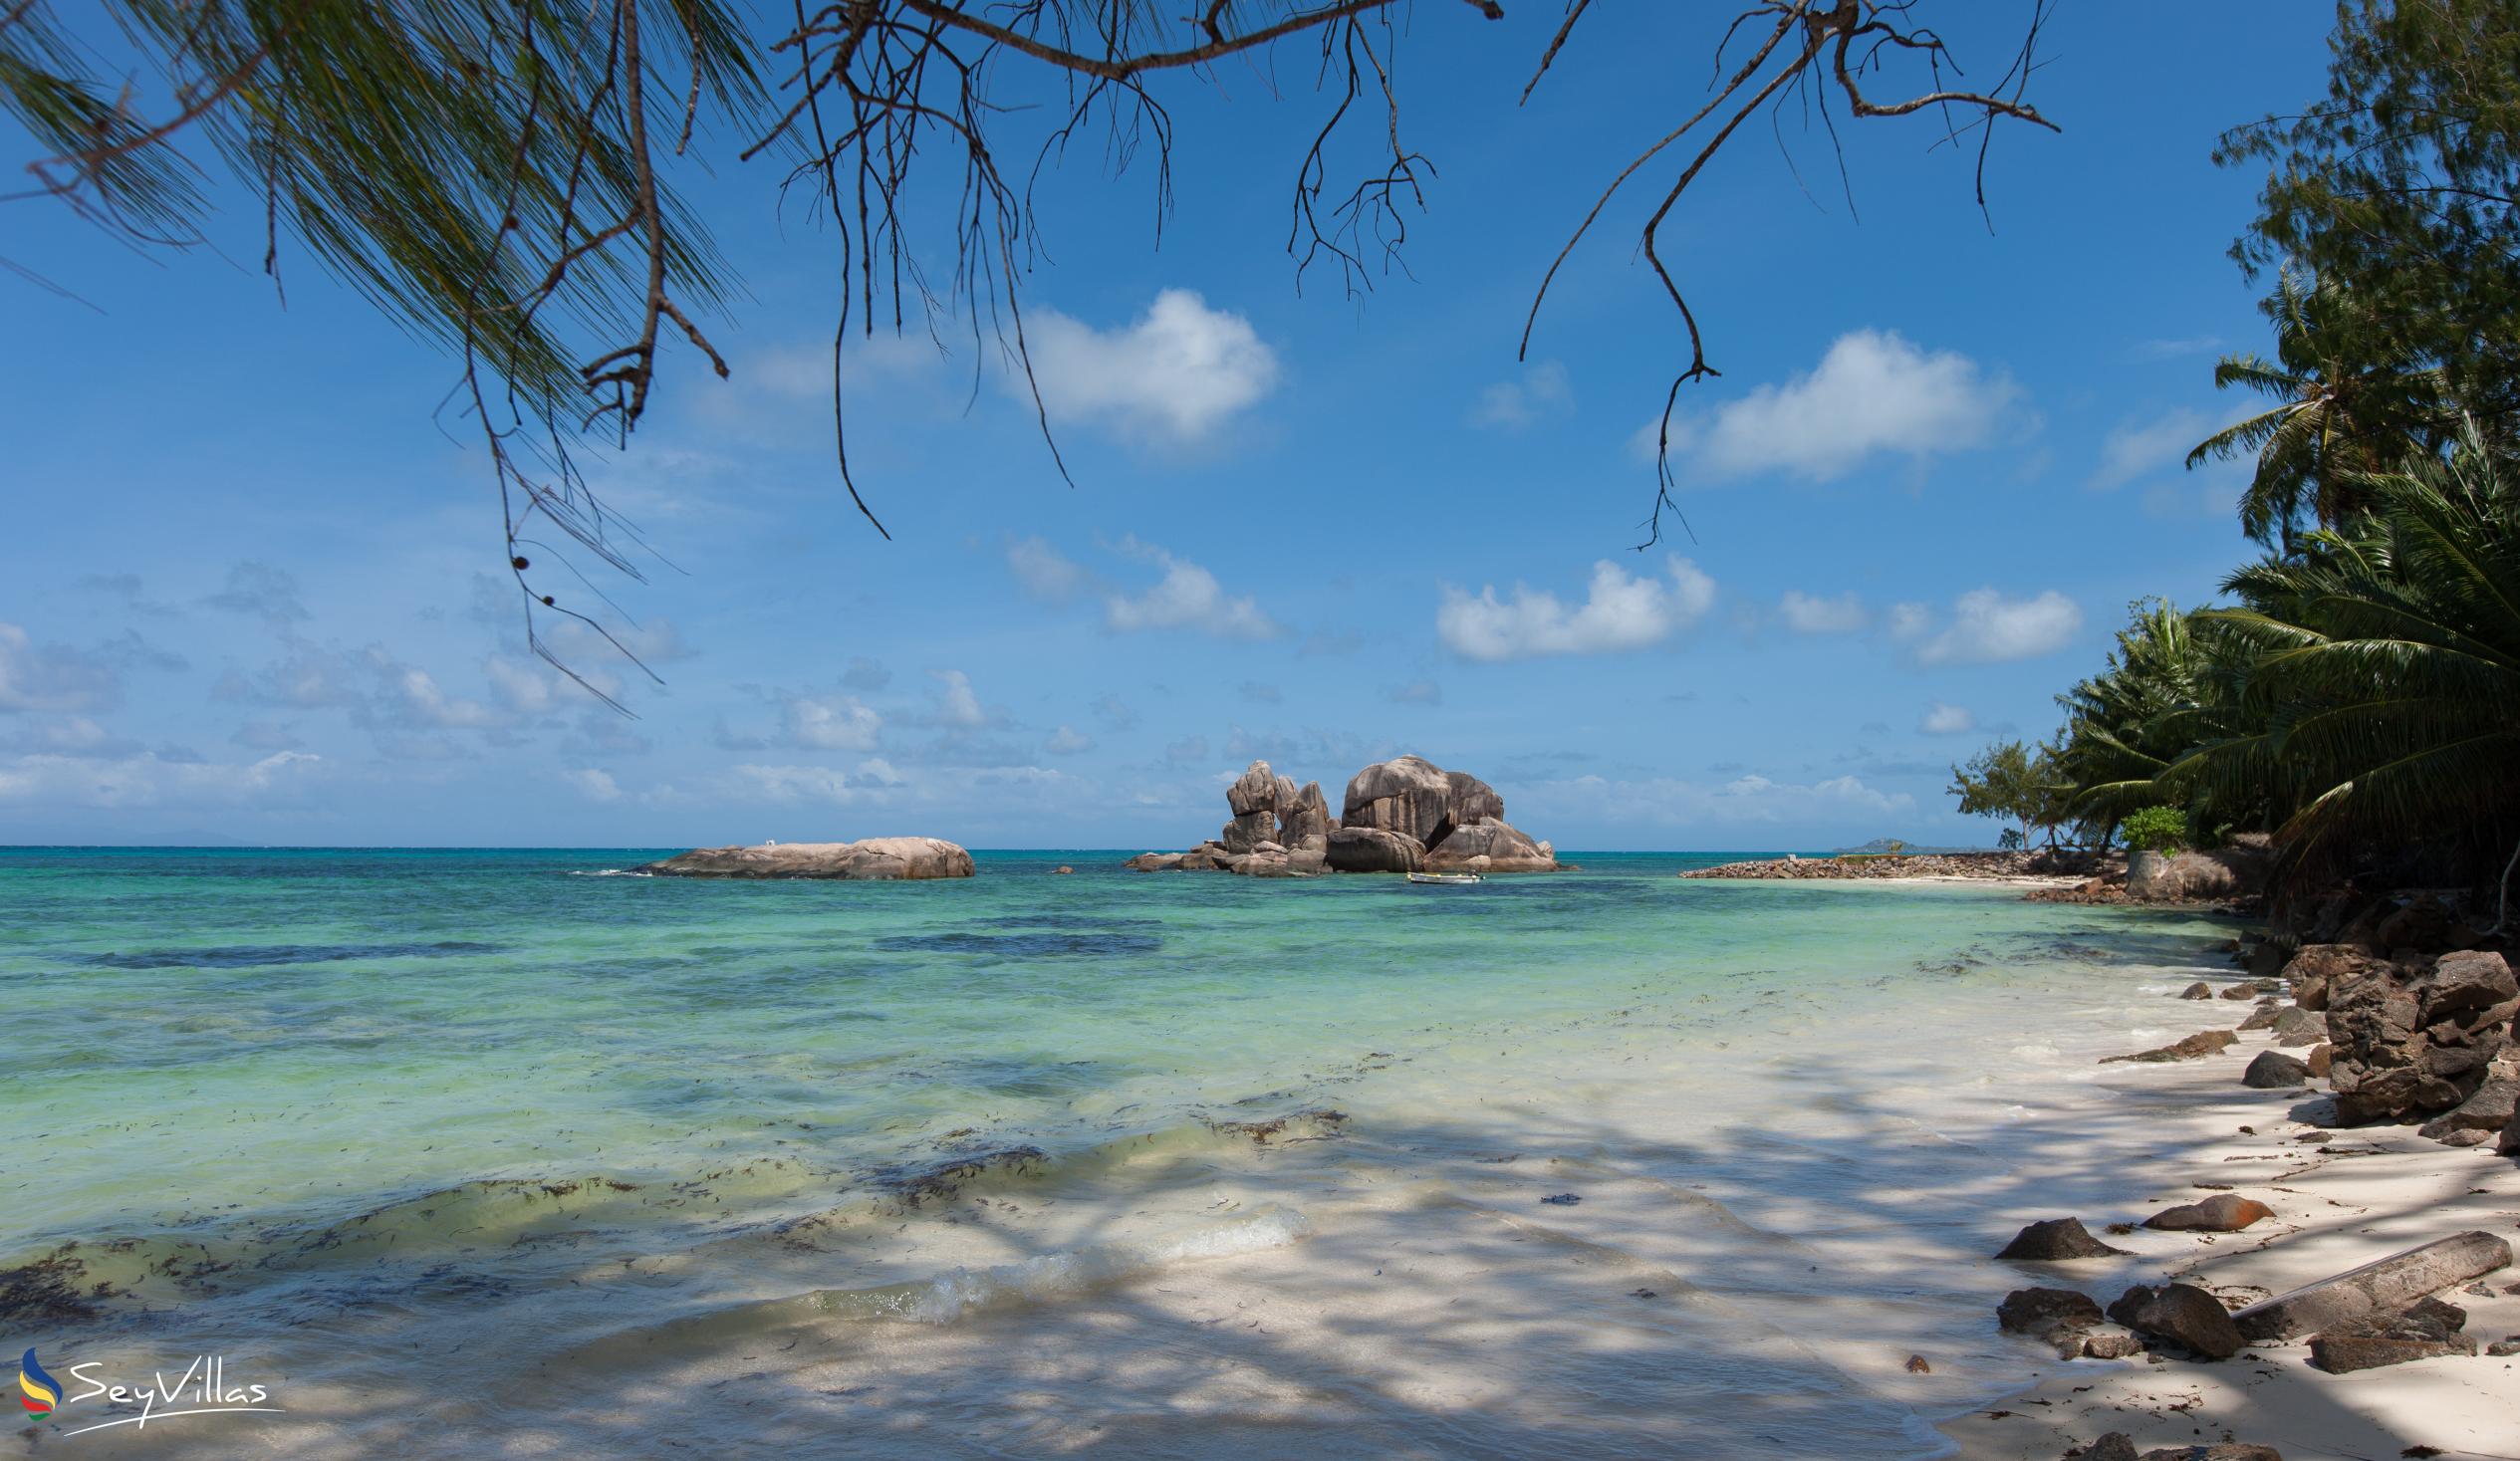 Photo 41: YASAD Luxury Beach Residence - Location - Praslin (Seychelles)